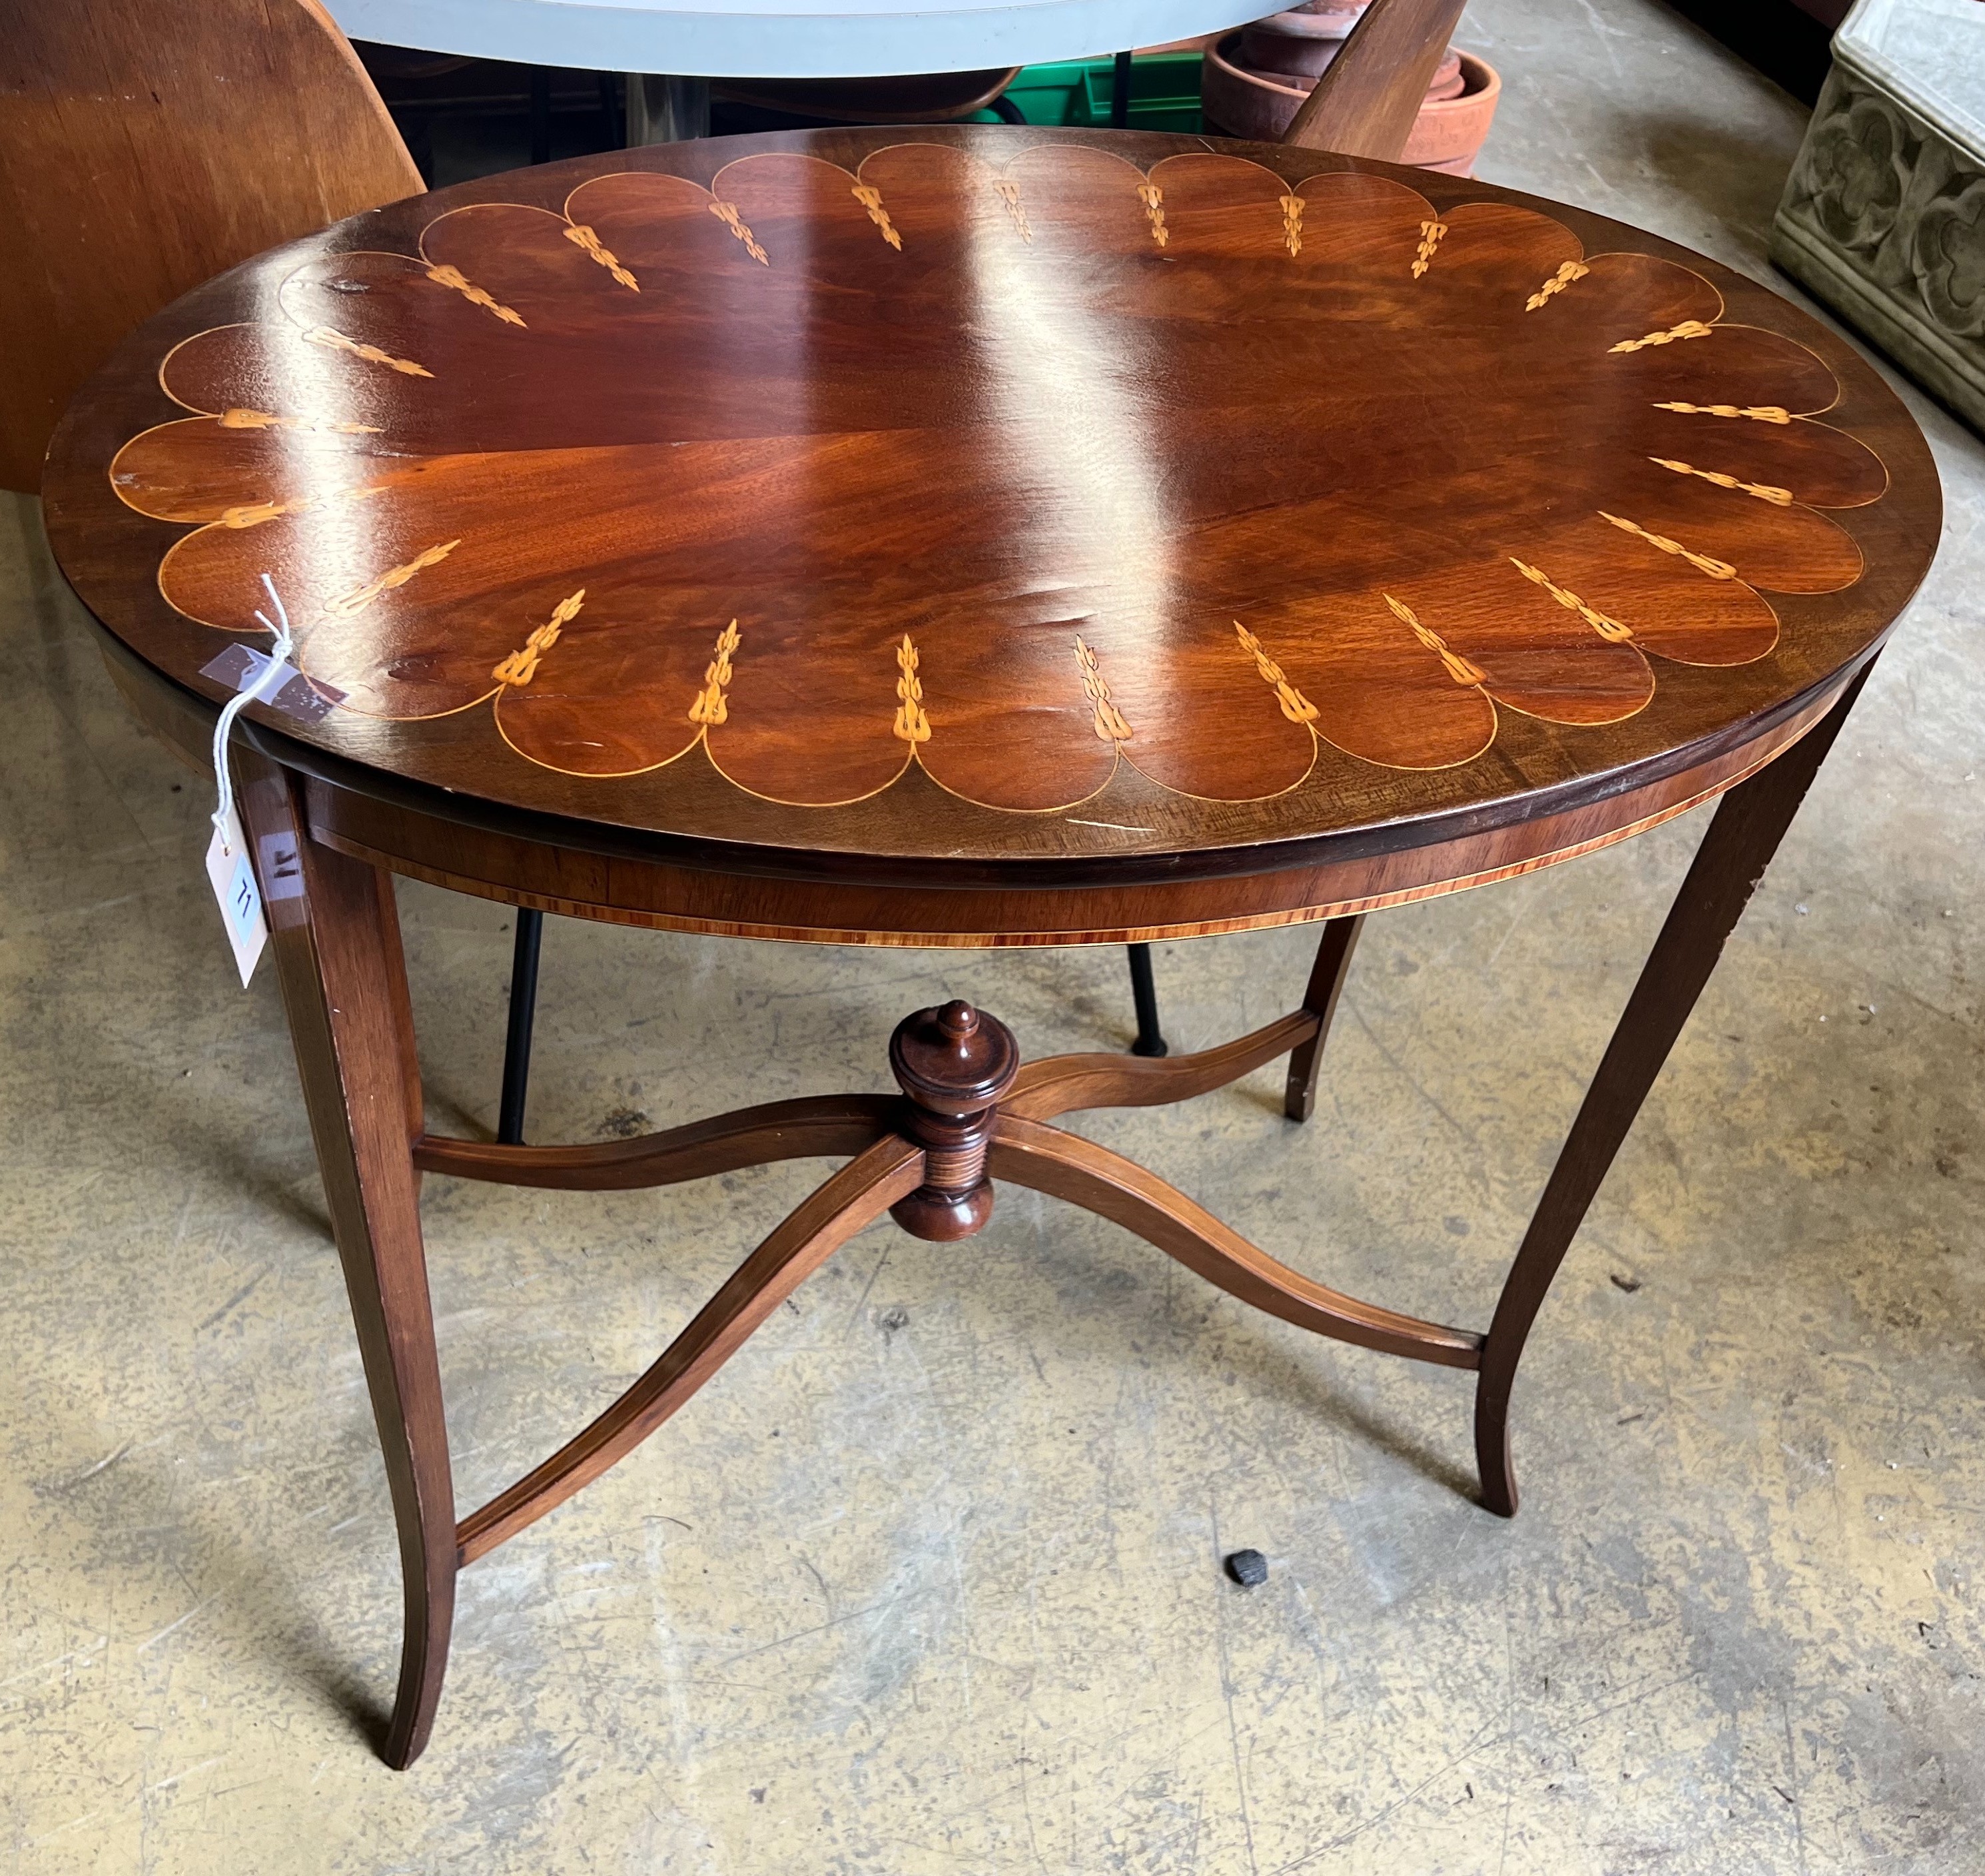 An Edwardian oval inlaid mahogany centre table, width 78cm depth 72cm height 74cm